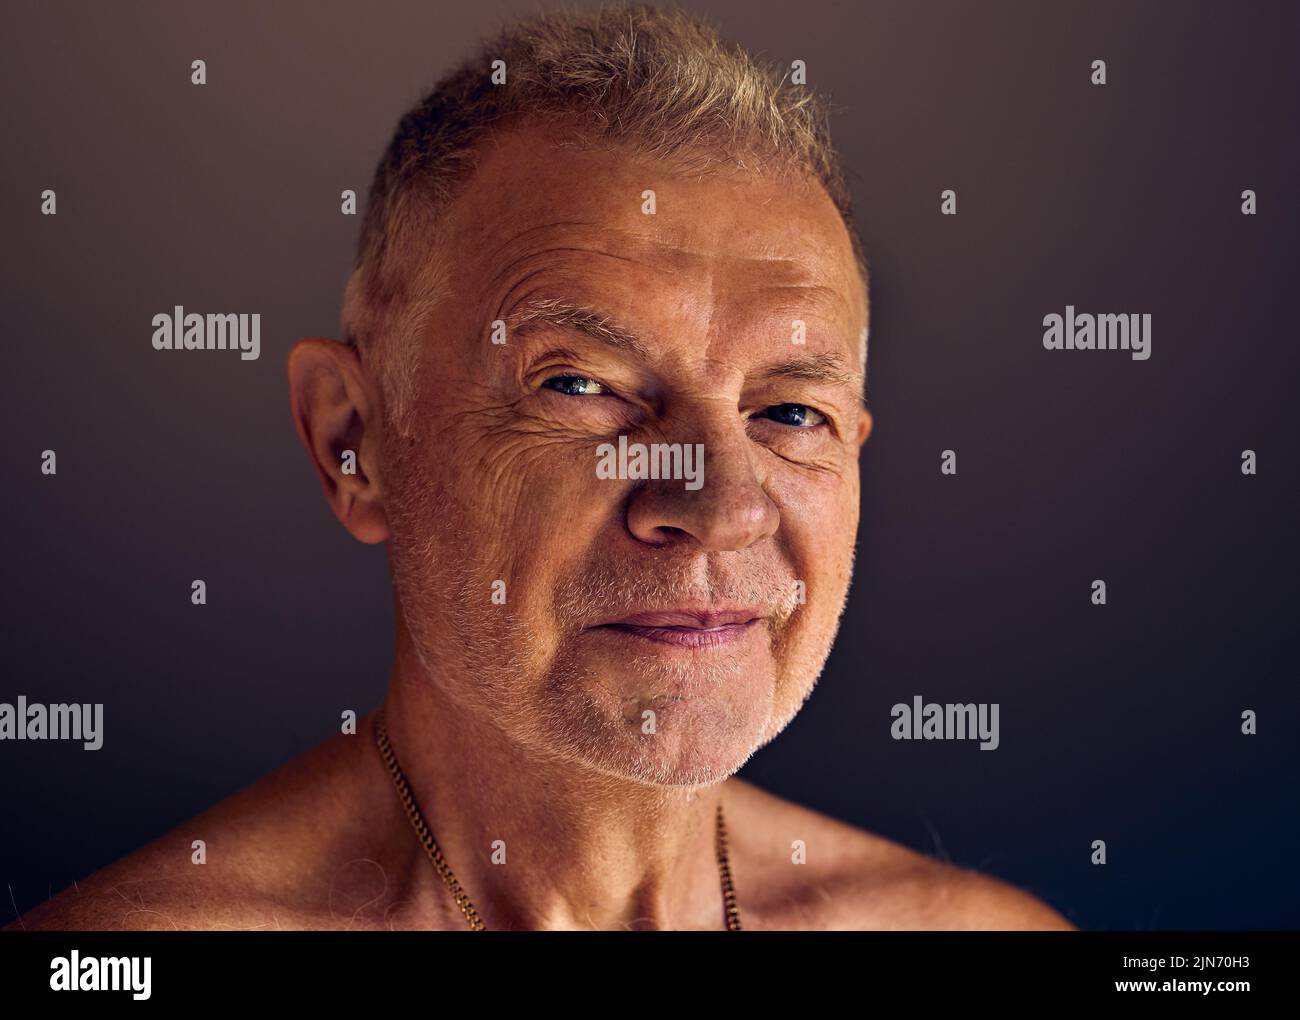 Portrait of an elderly mature man Stock Photo